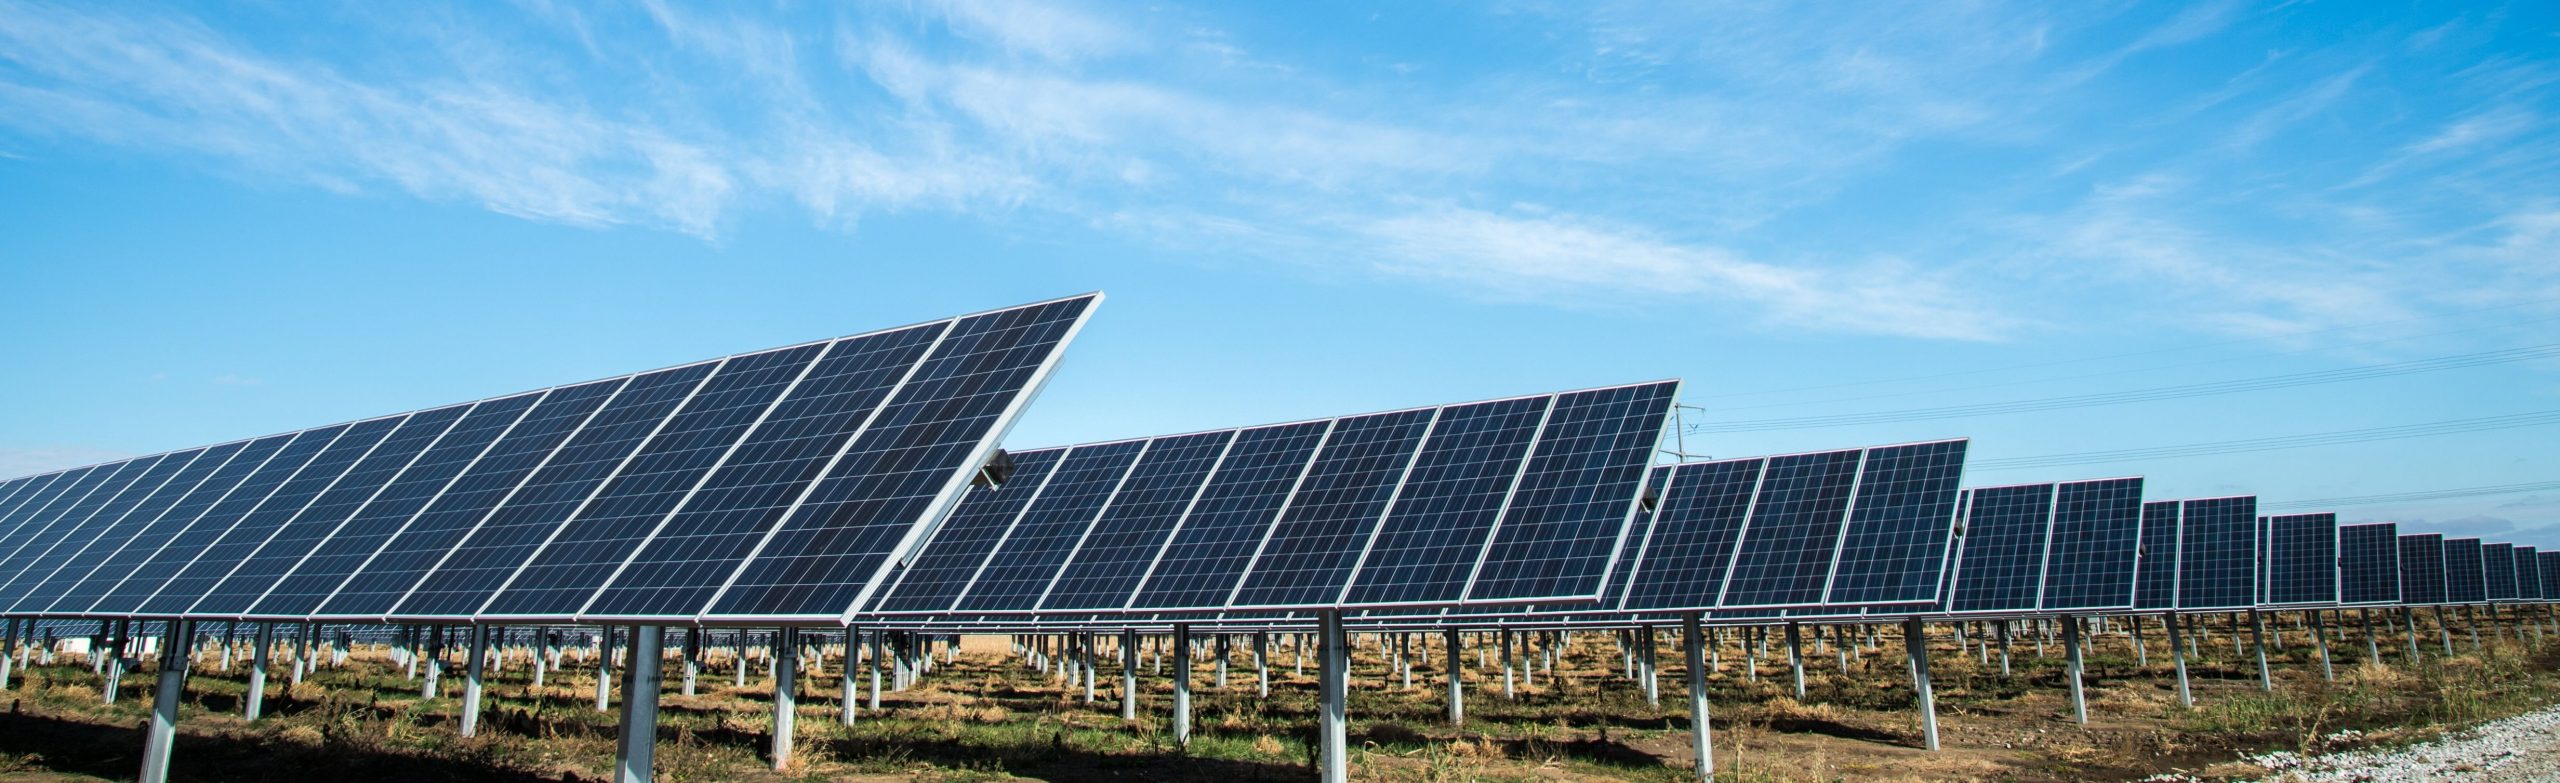 AleaSoft - Solar panels renewable energies scaled